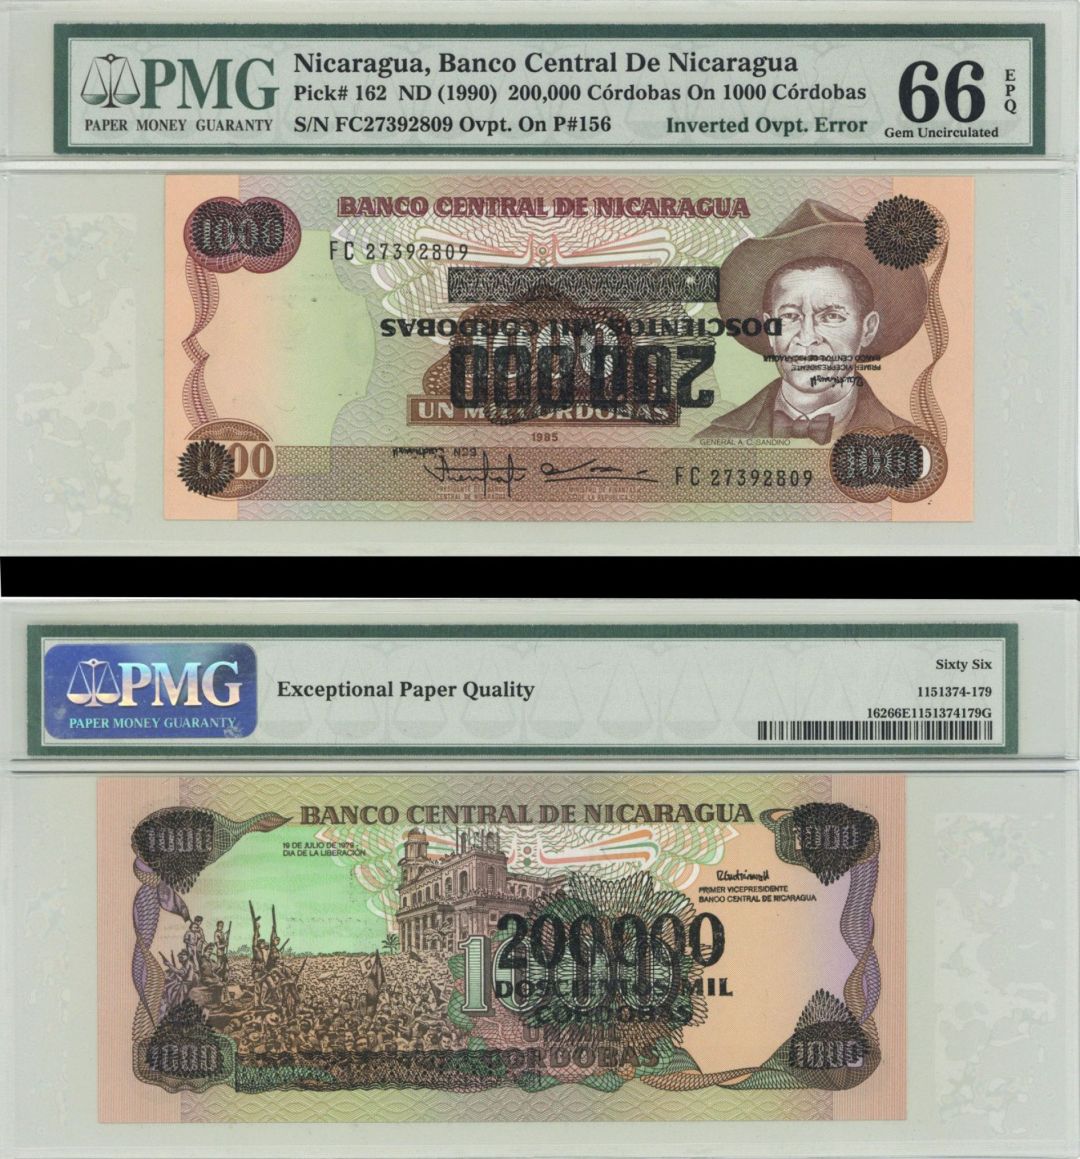 Nicaragua - 200,000 Cordobas on 1000 Cordobas - P-162 - PMG 66 - Foreign Paper Money Error